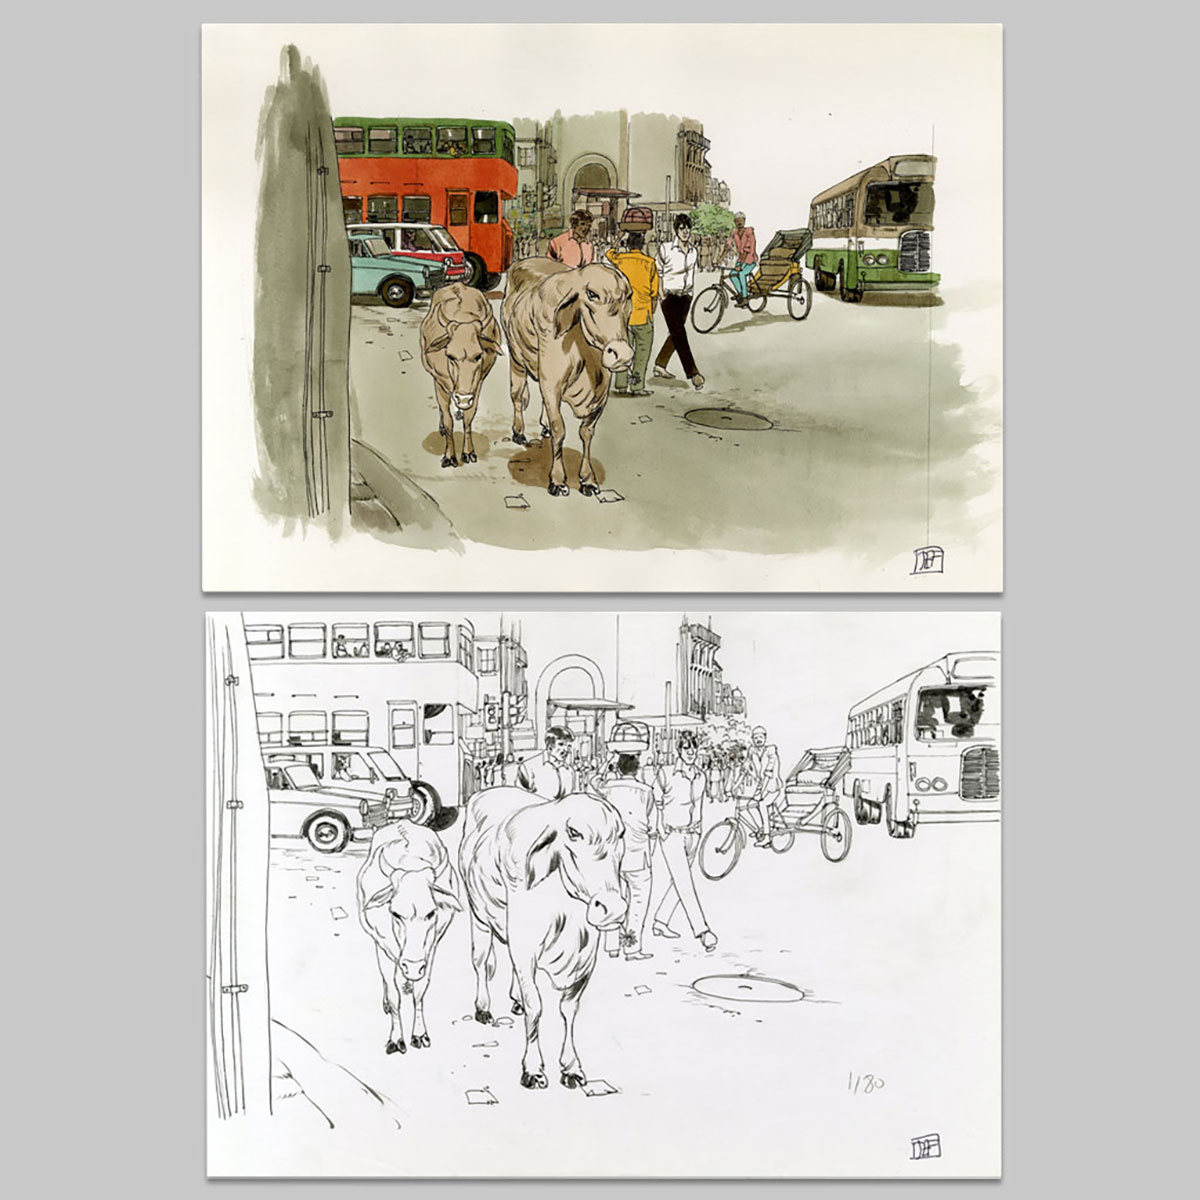 Original drawing + enhanced digital print, Flash, Daily life in India